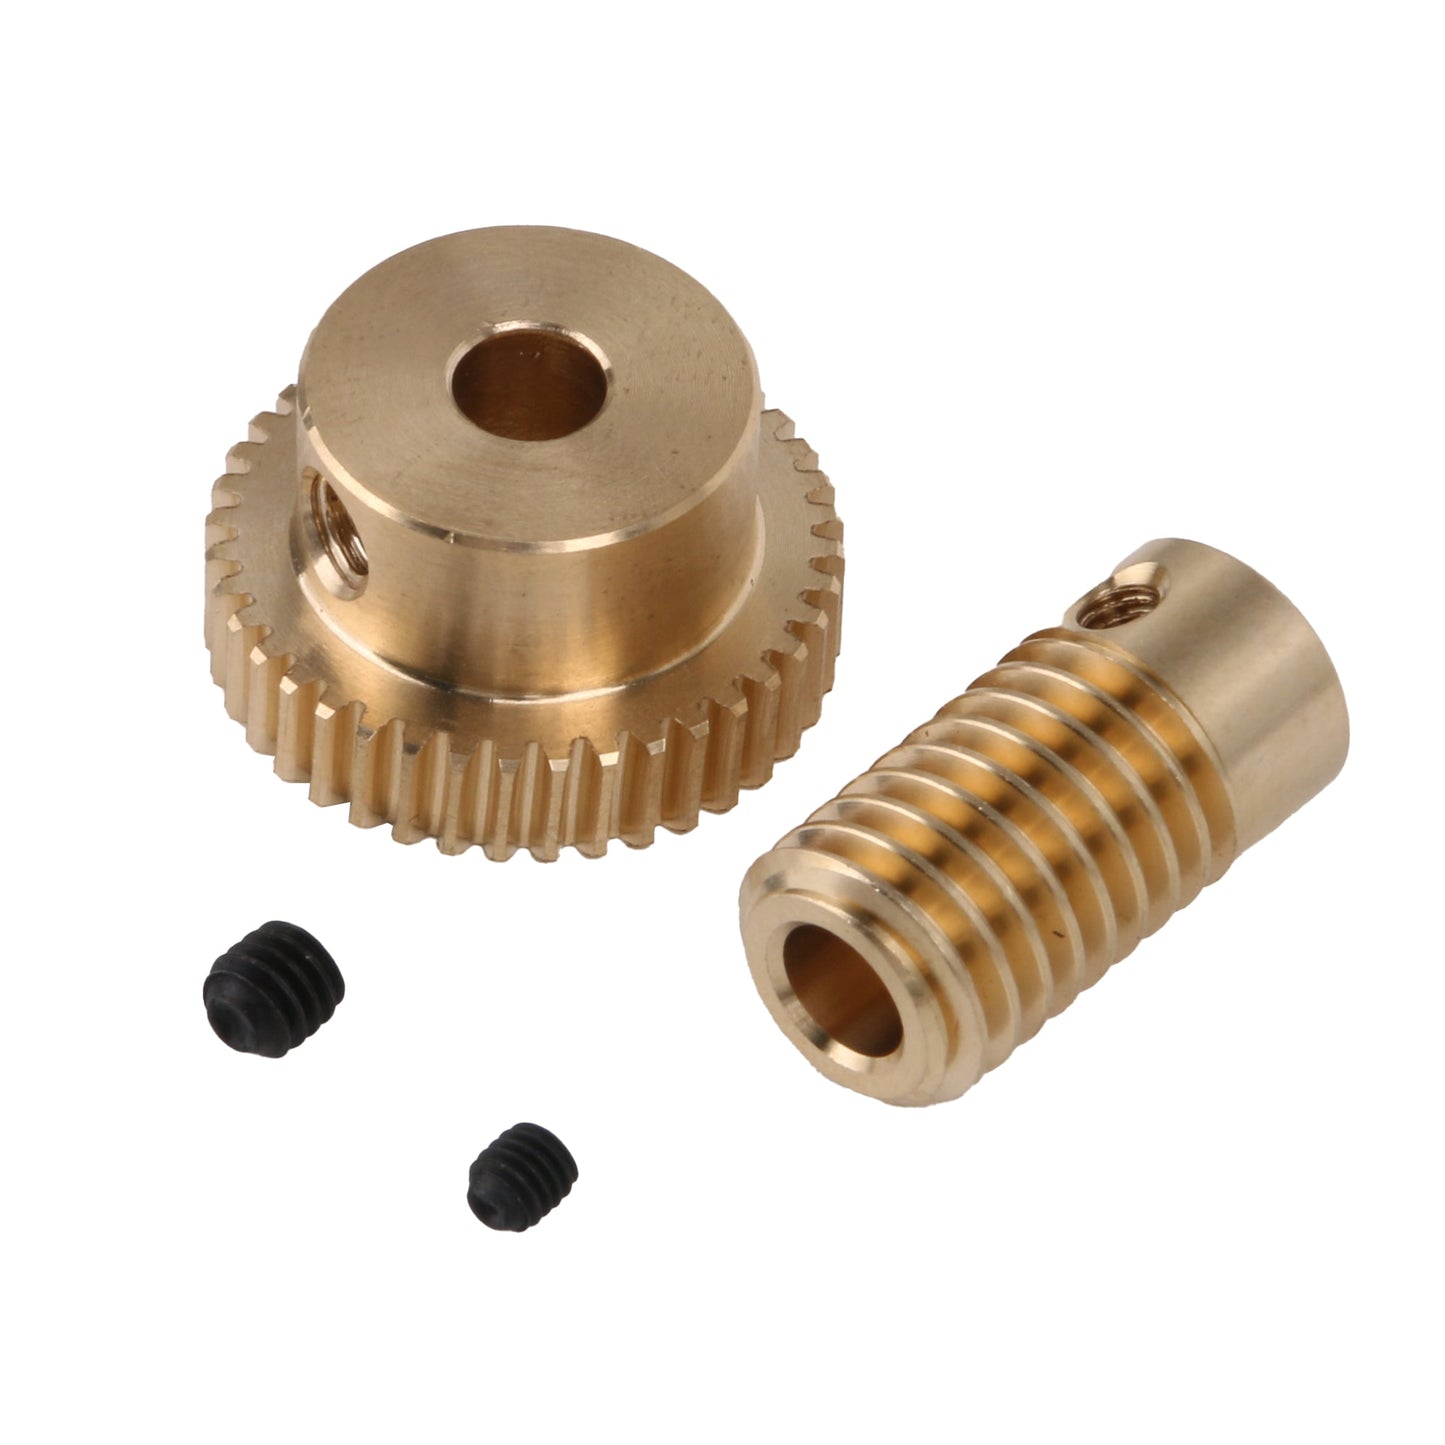 BQLZR 40T 0.5Modulus 1:40 Brass Gear Wheel & 5mm Hole Dia Gear Shaft Kit for Industry